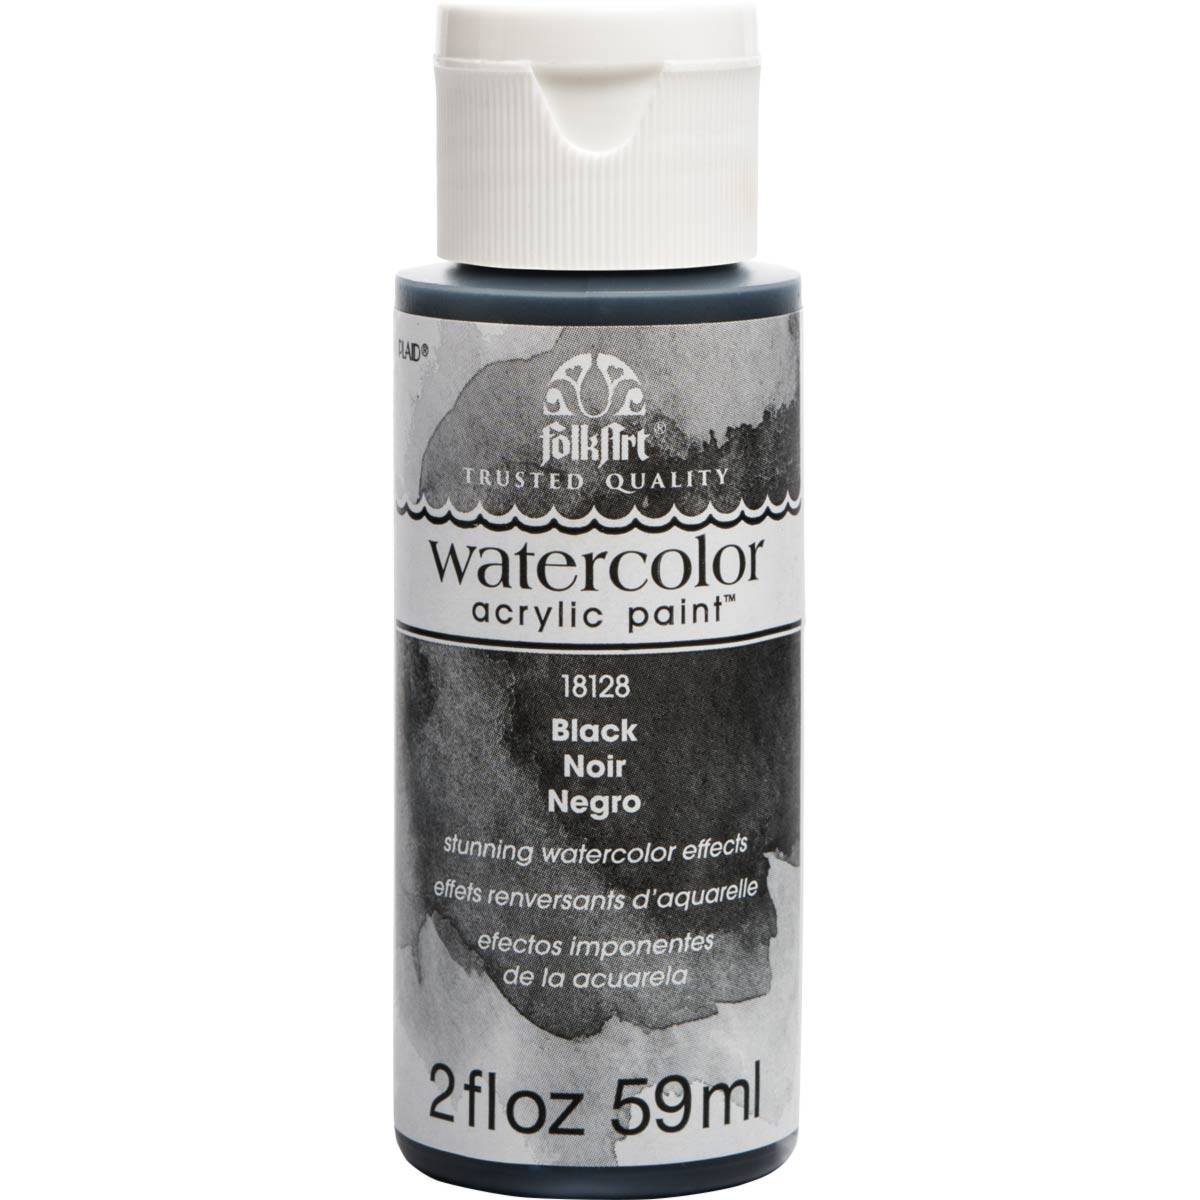 FolkArt ® Watercolor Acrylic Paint™ - Black, 2 oz. - 18128